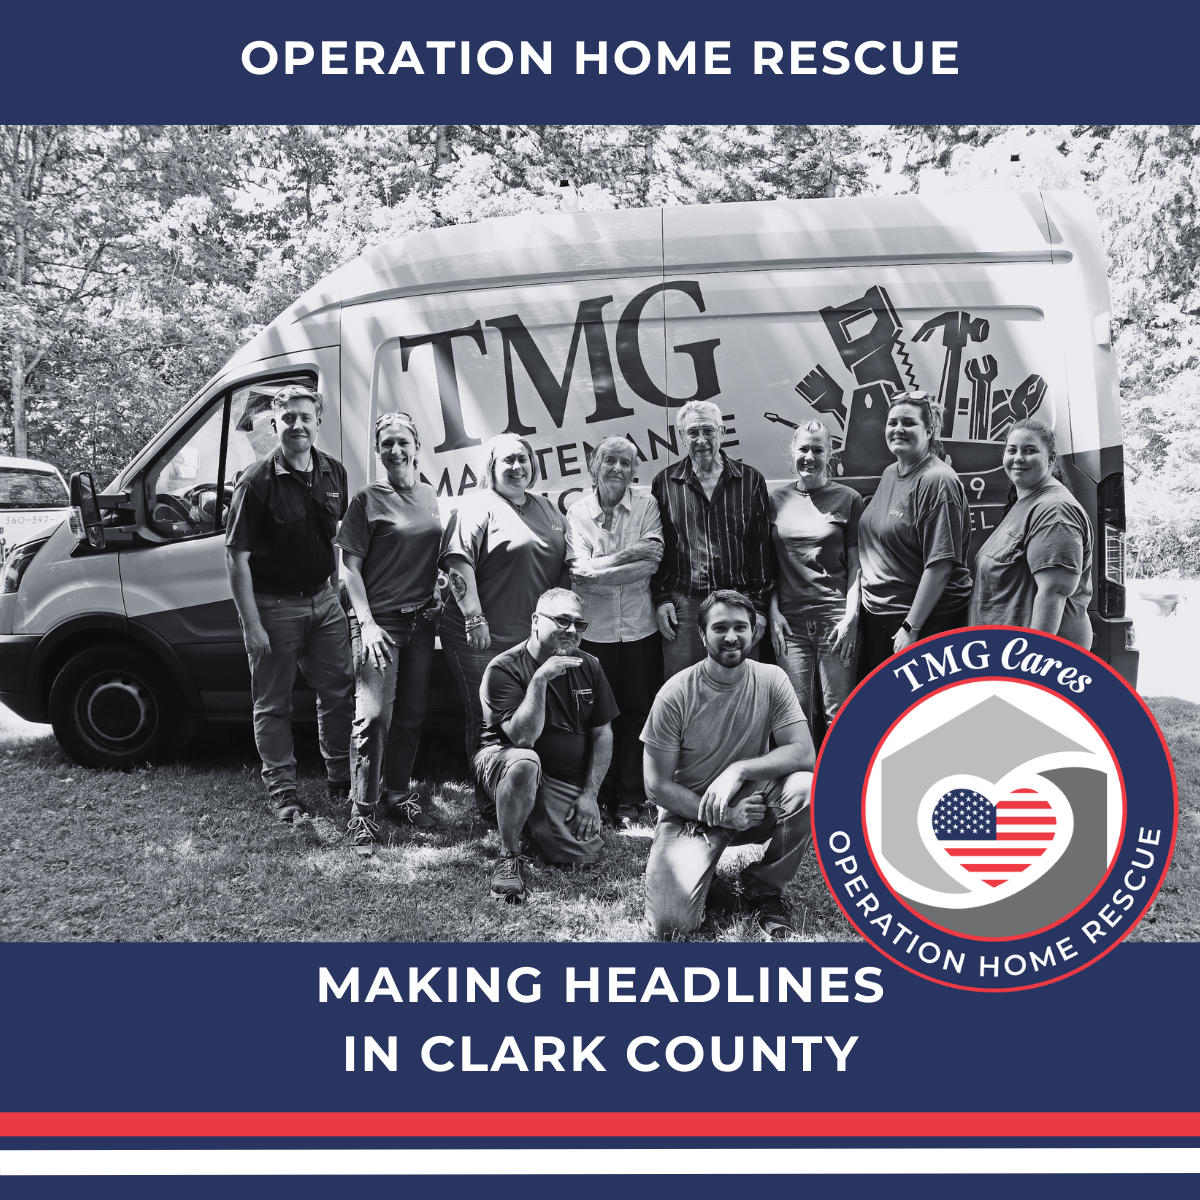 OHR Making Headlines in Clark County